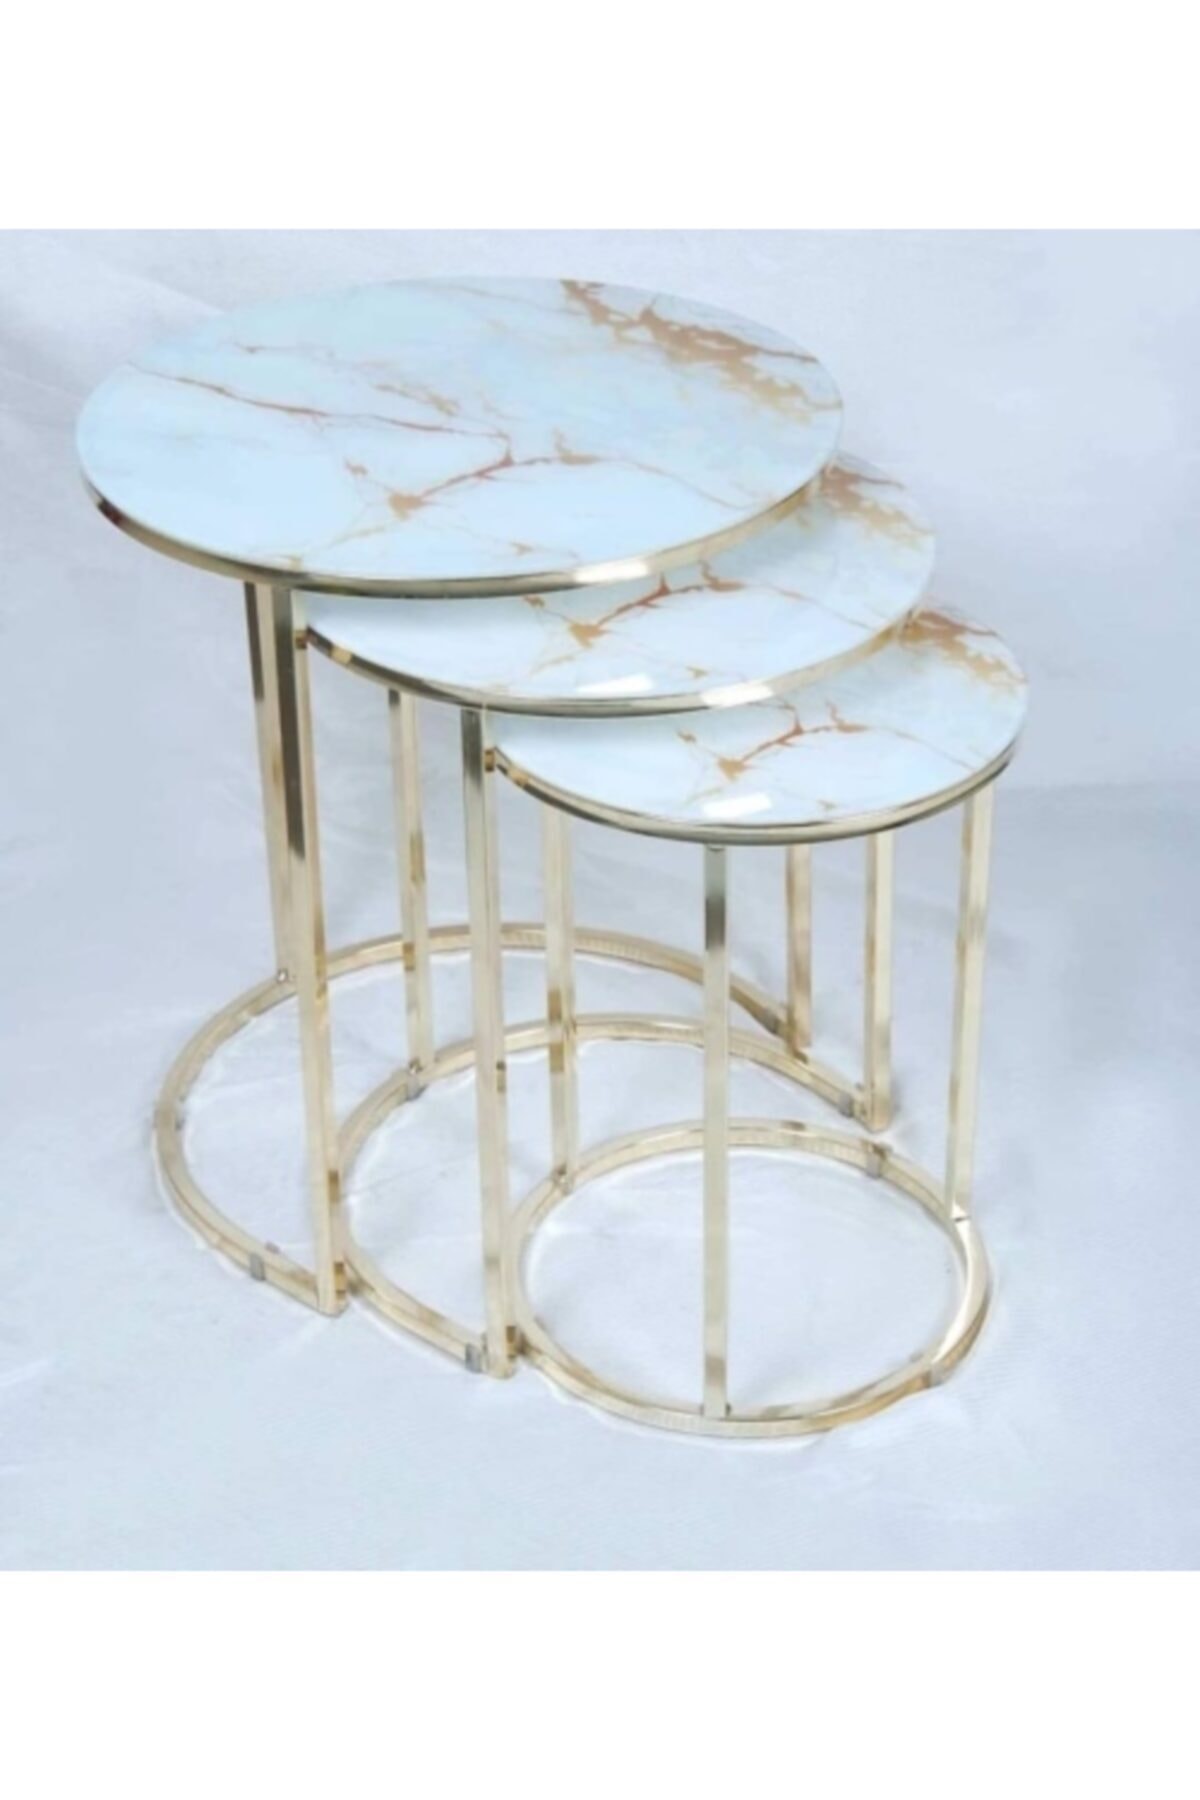 sıde table-3 Piece Table